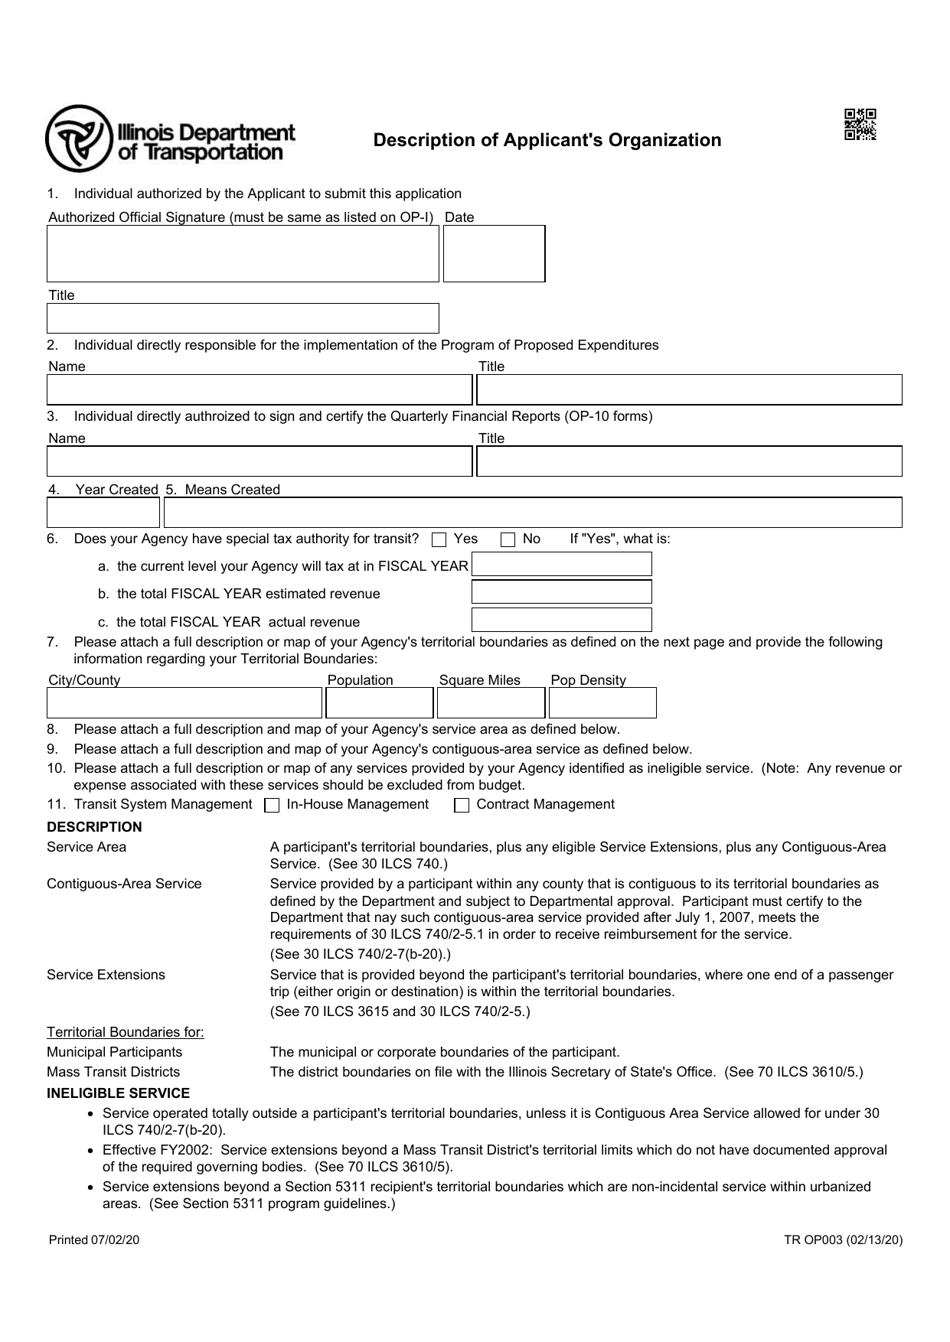 Form TR OP003 Description of Applicants Organization - Illinois, Page 1